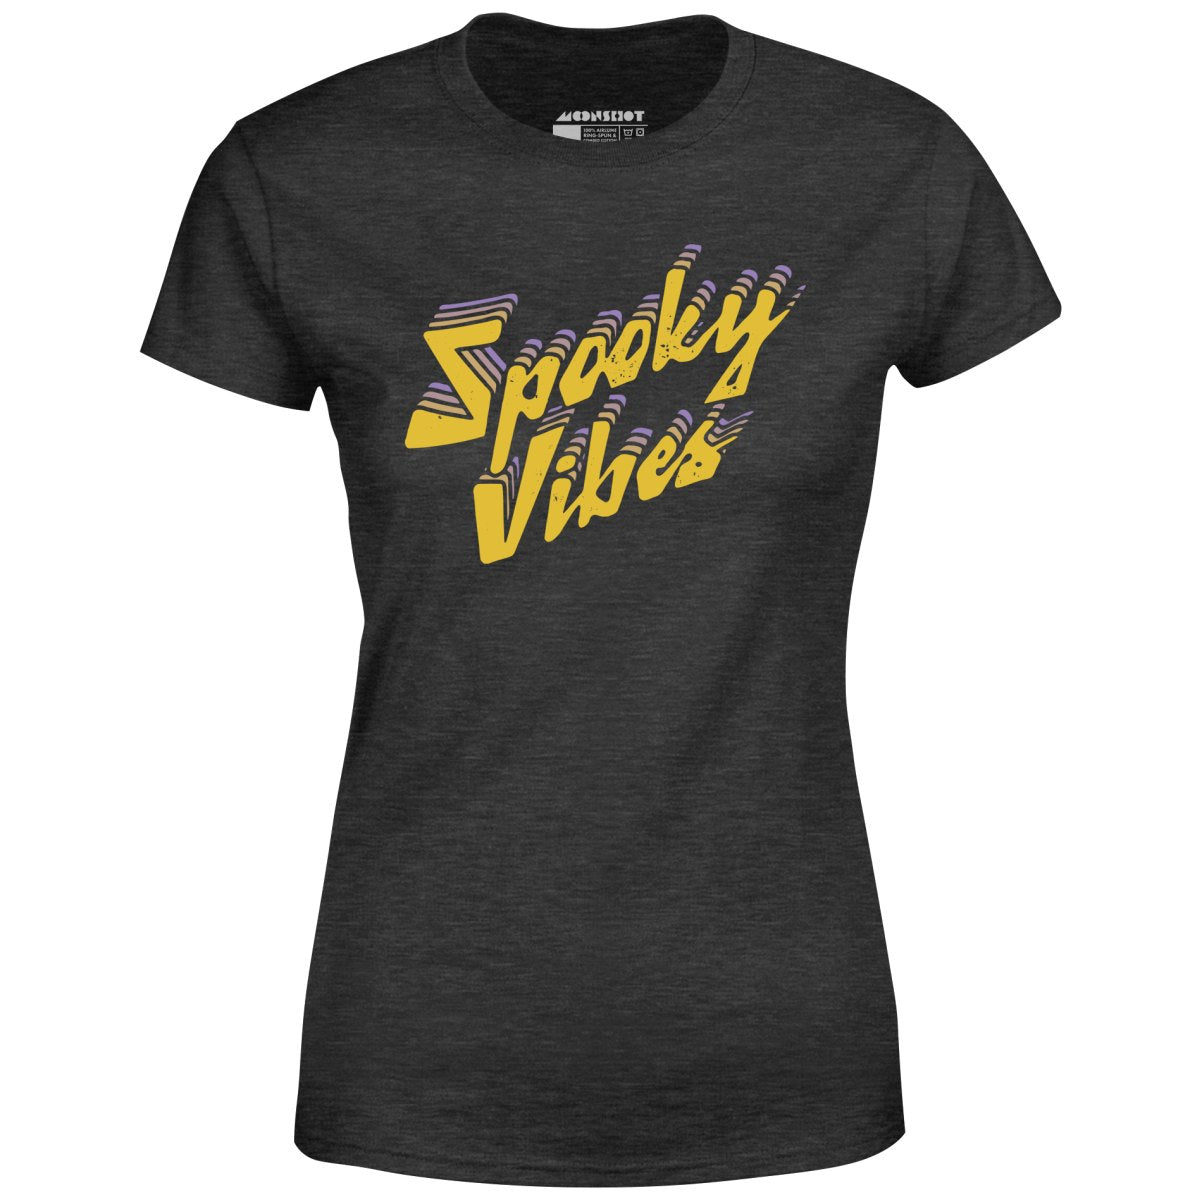 Spooky Vibes - Women's T-Shirt